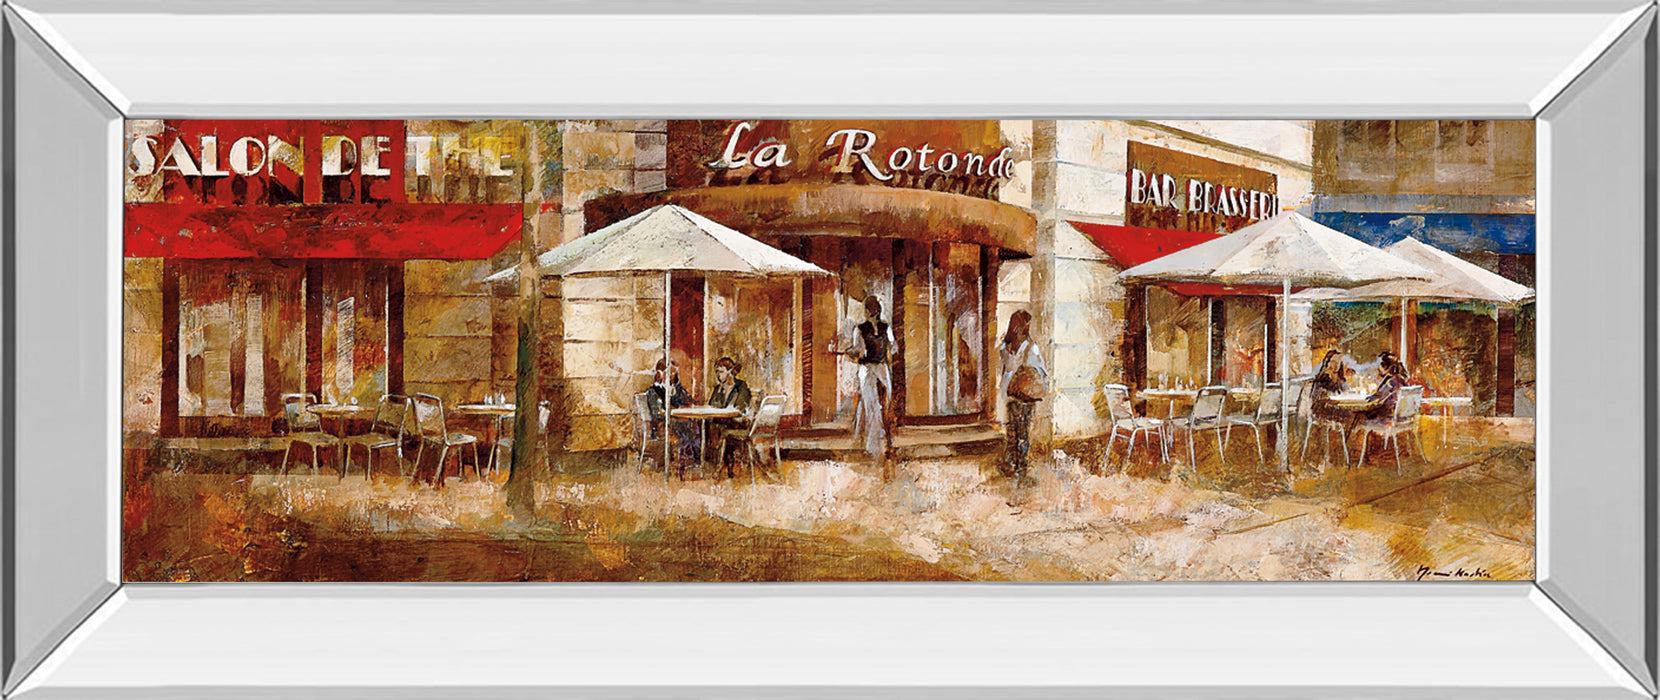 La Rolende By Noemi Martin - Mirror Framed Print Wall Art - Red